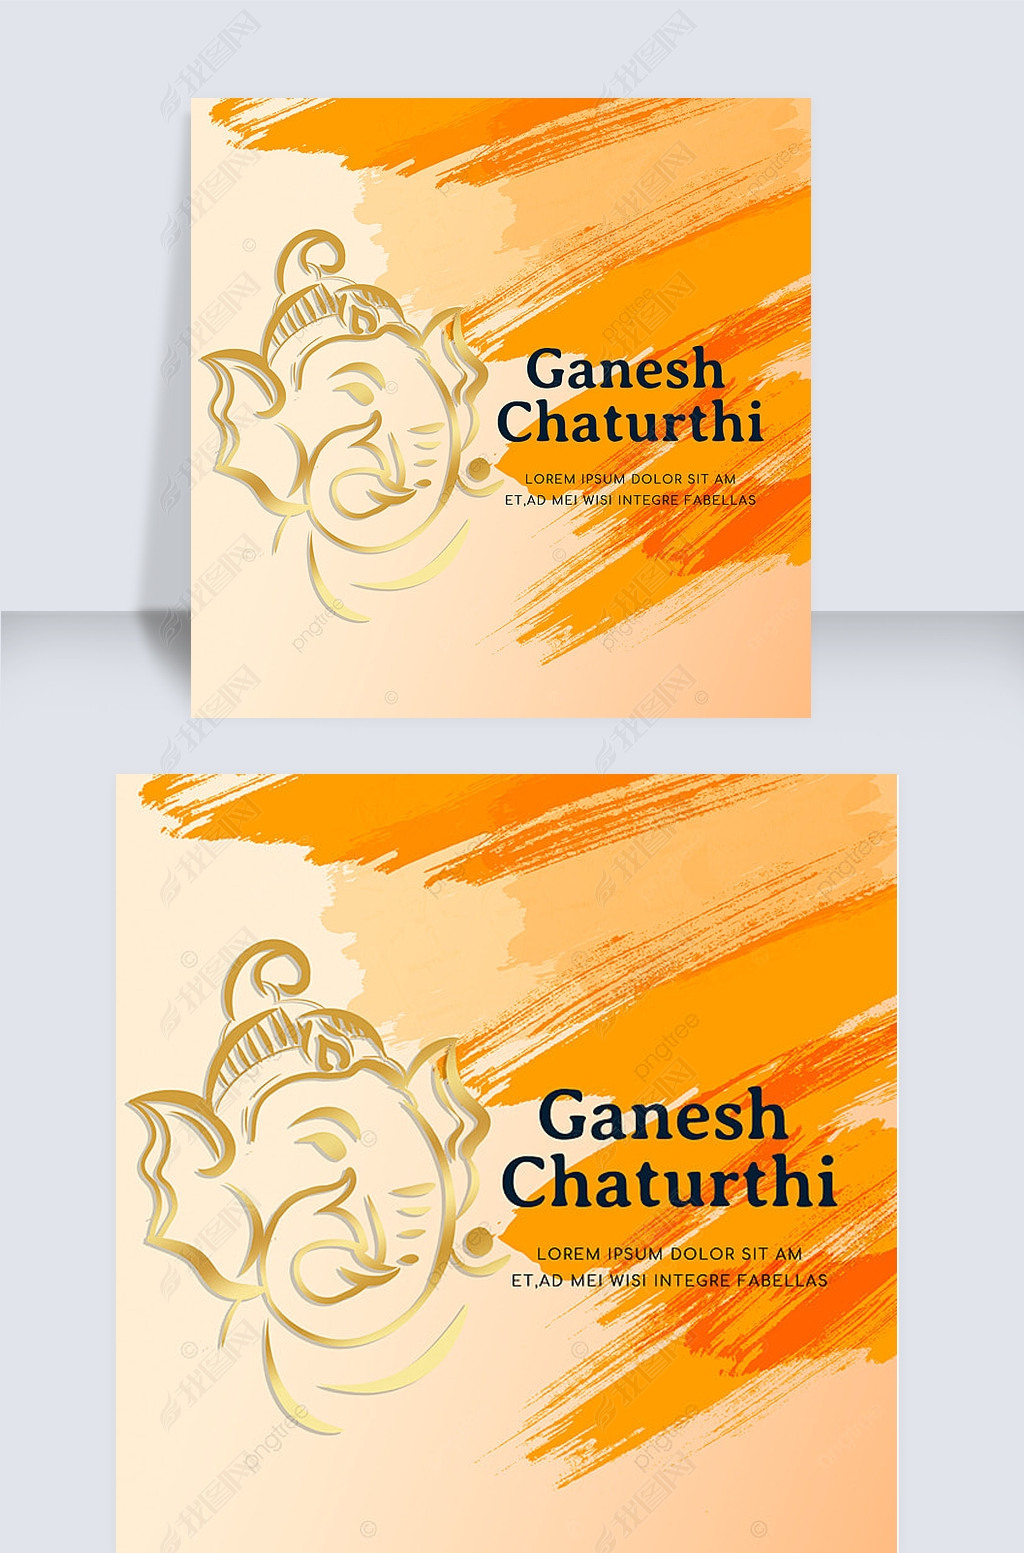 india ganesh chaturthi orange social media post